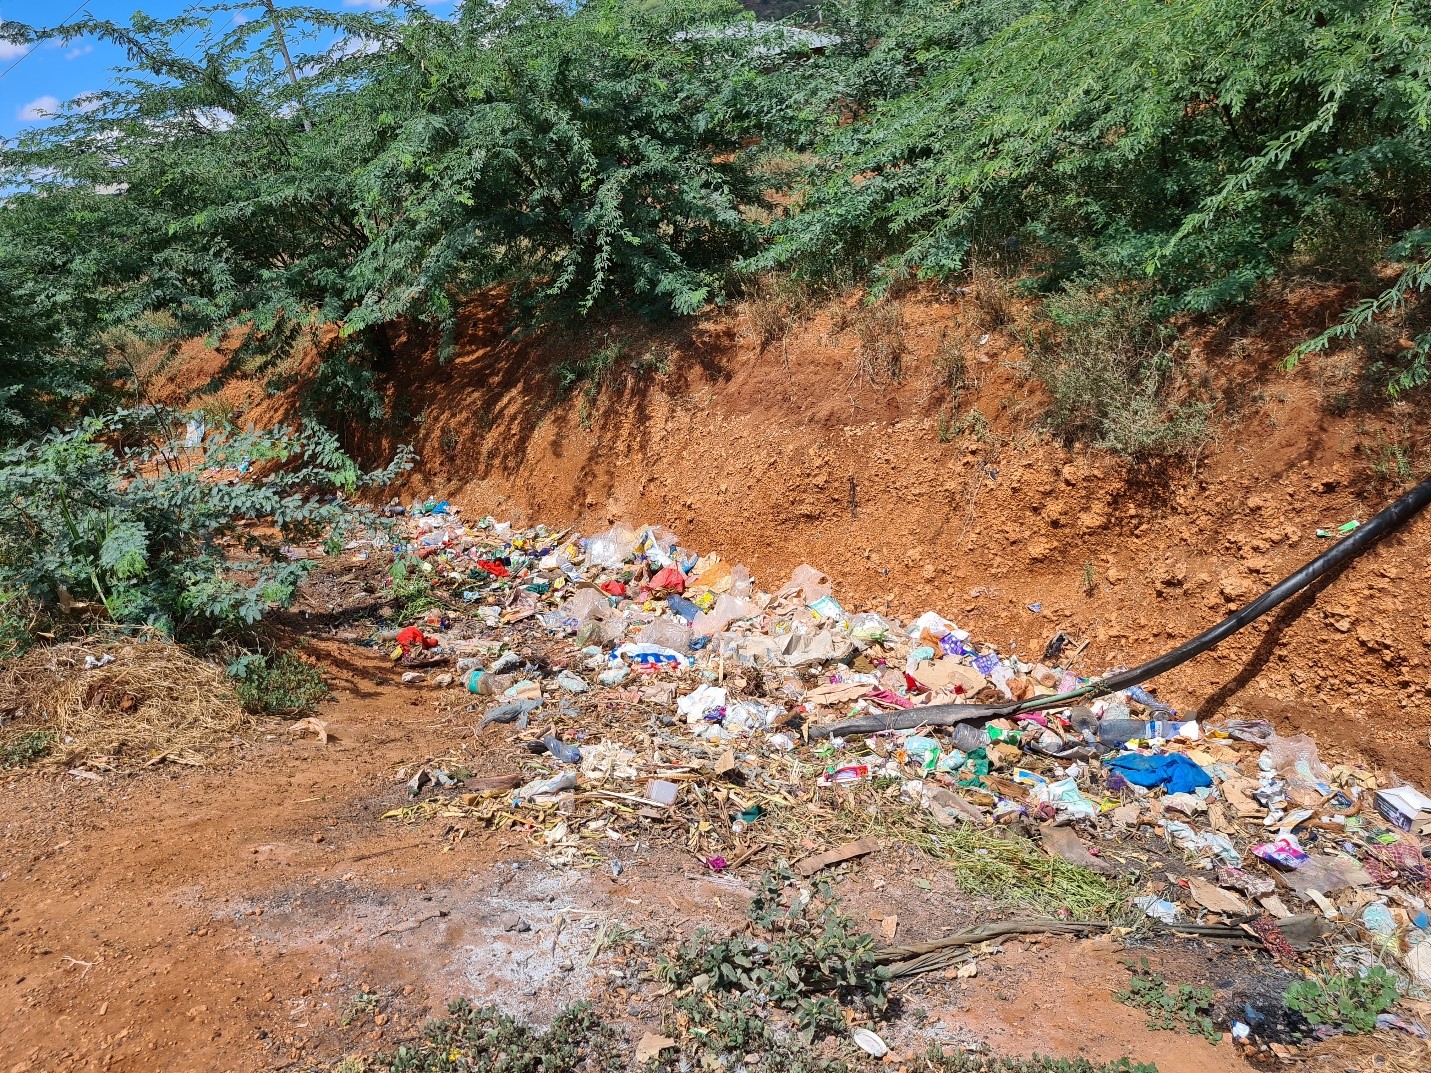 UN-Habitat project to improve municipal solid Waste management in Kenya’s coastal area